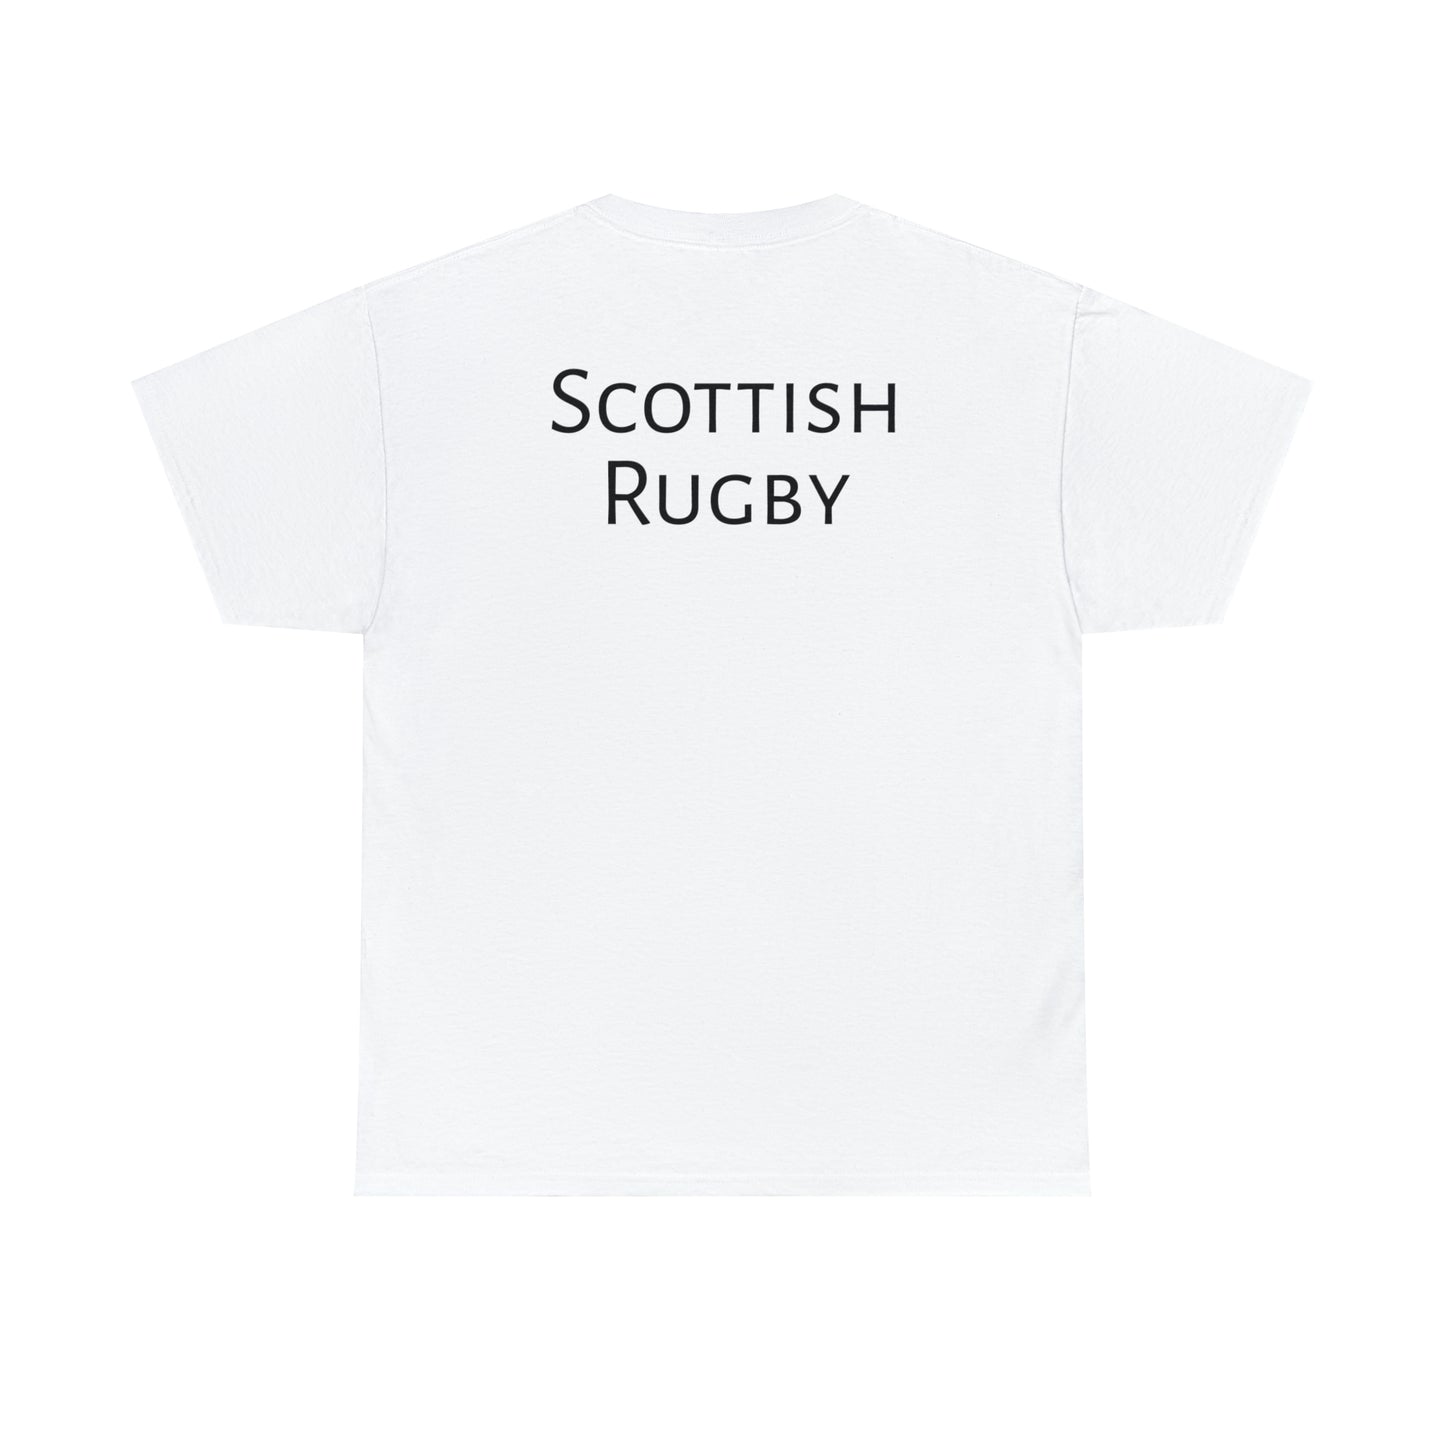 Celebrating Scotland - light shirts